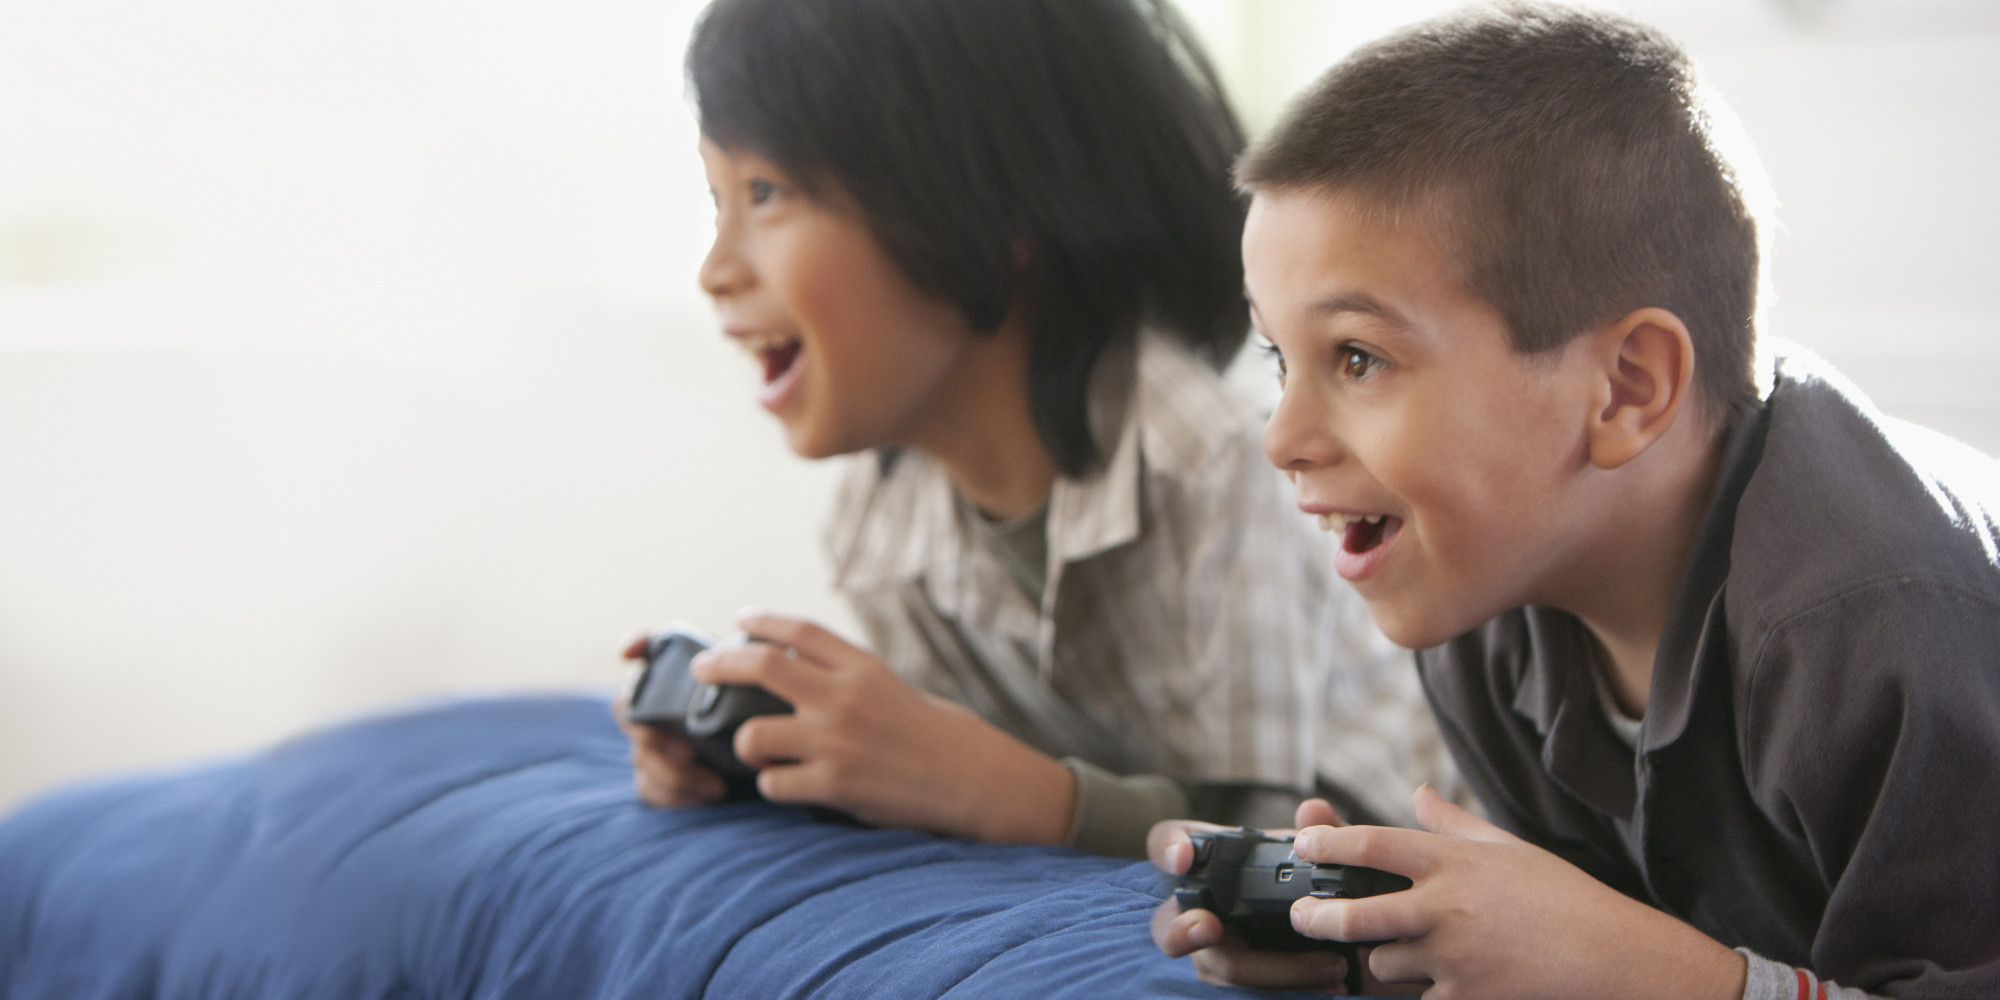 kids play video games